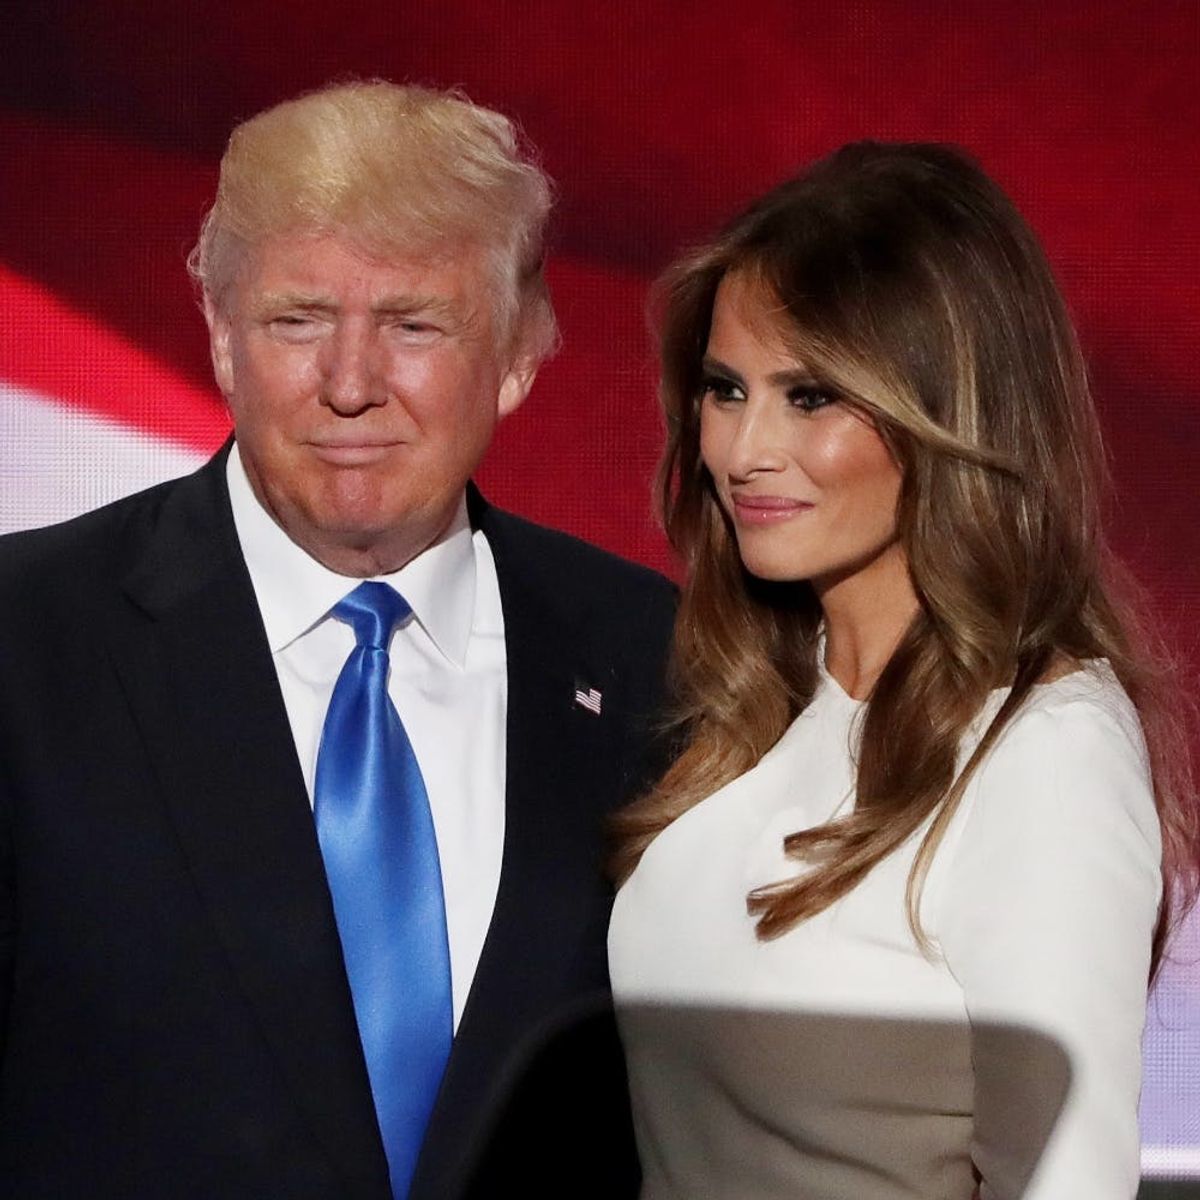 Melania Trump Defends Donald’s Behavior by Calling Him a “Boy” Who’s Easily Influenced